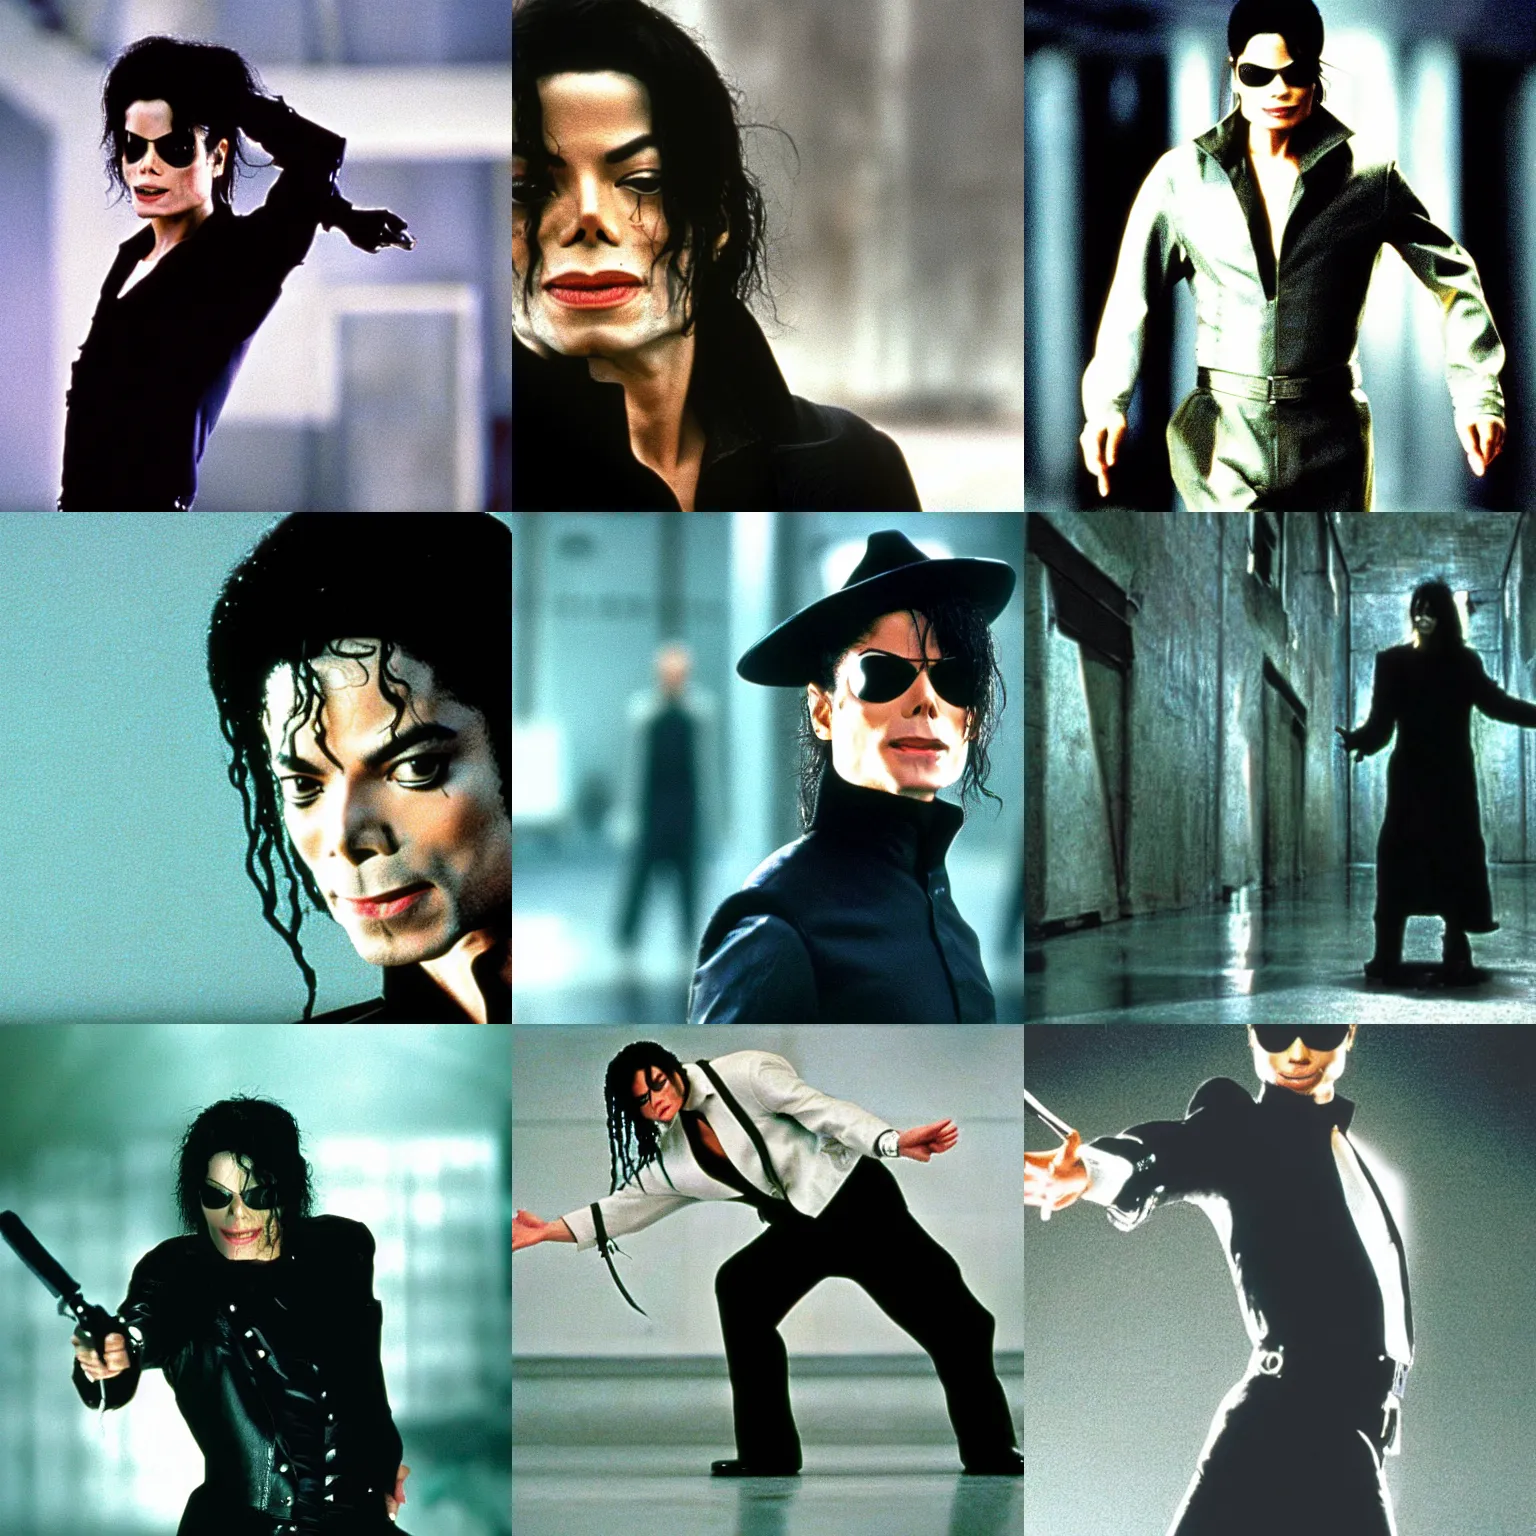 Prompt: Michael Jackson, Still from The Matrix (1999)